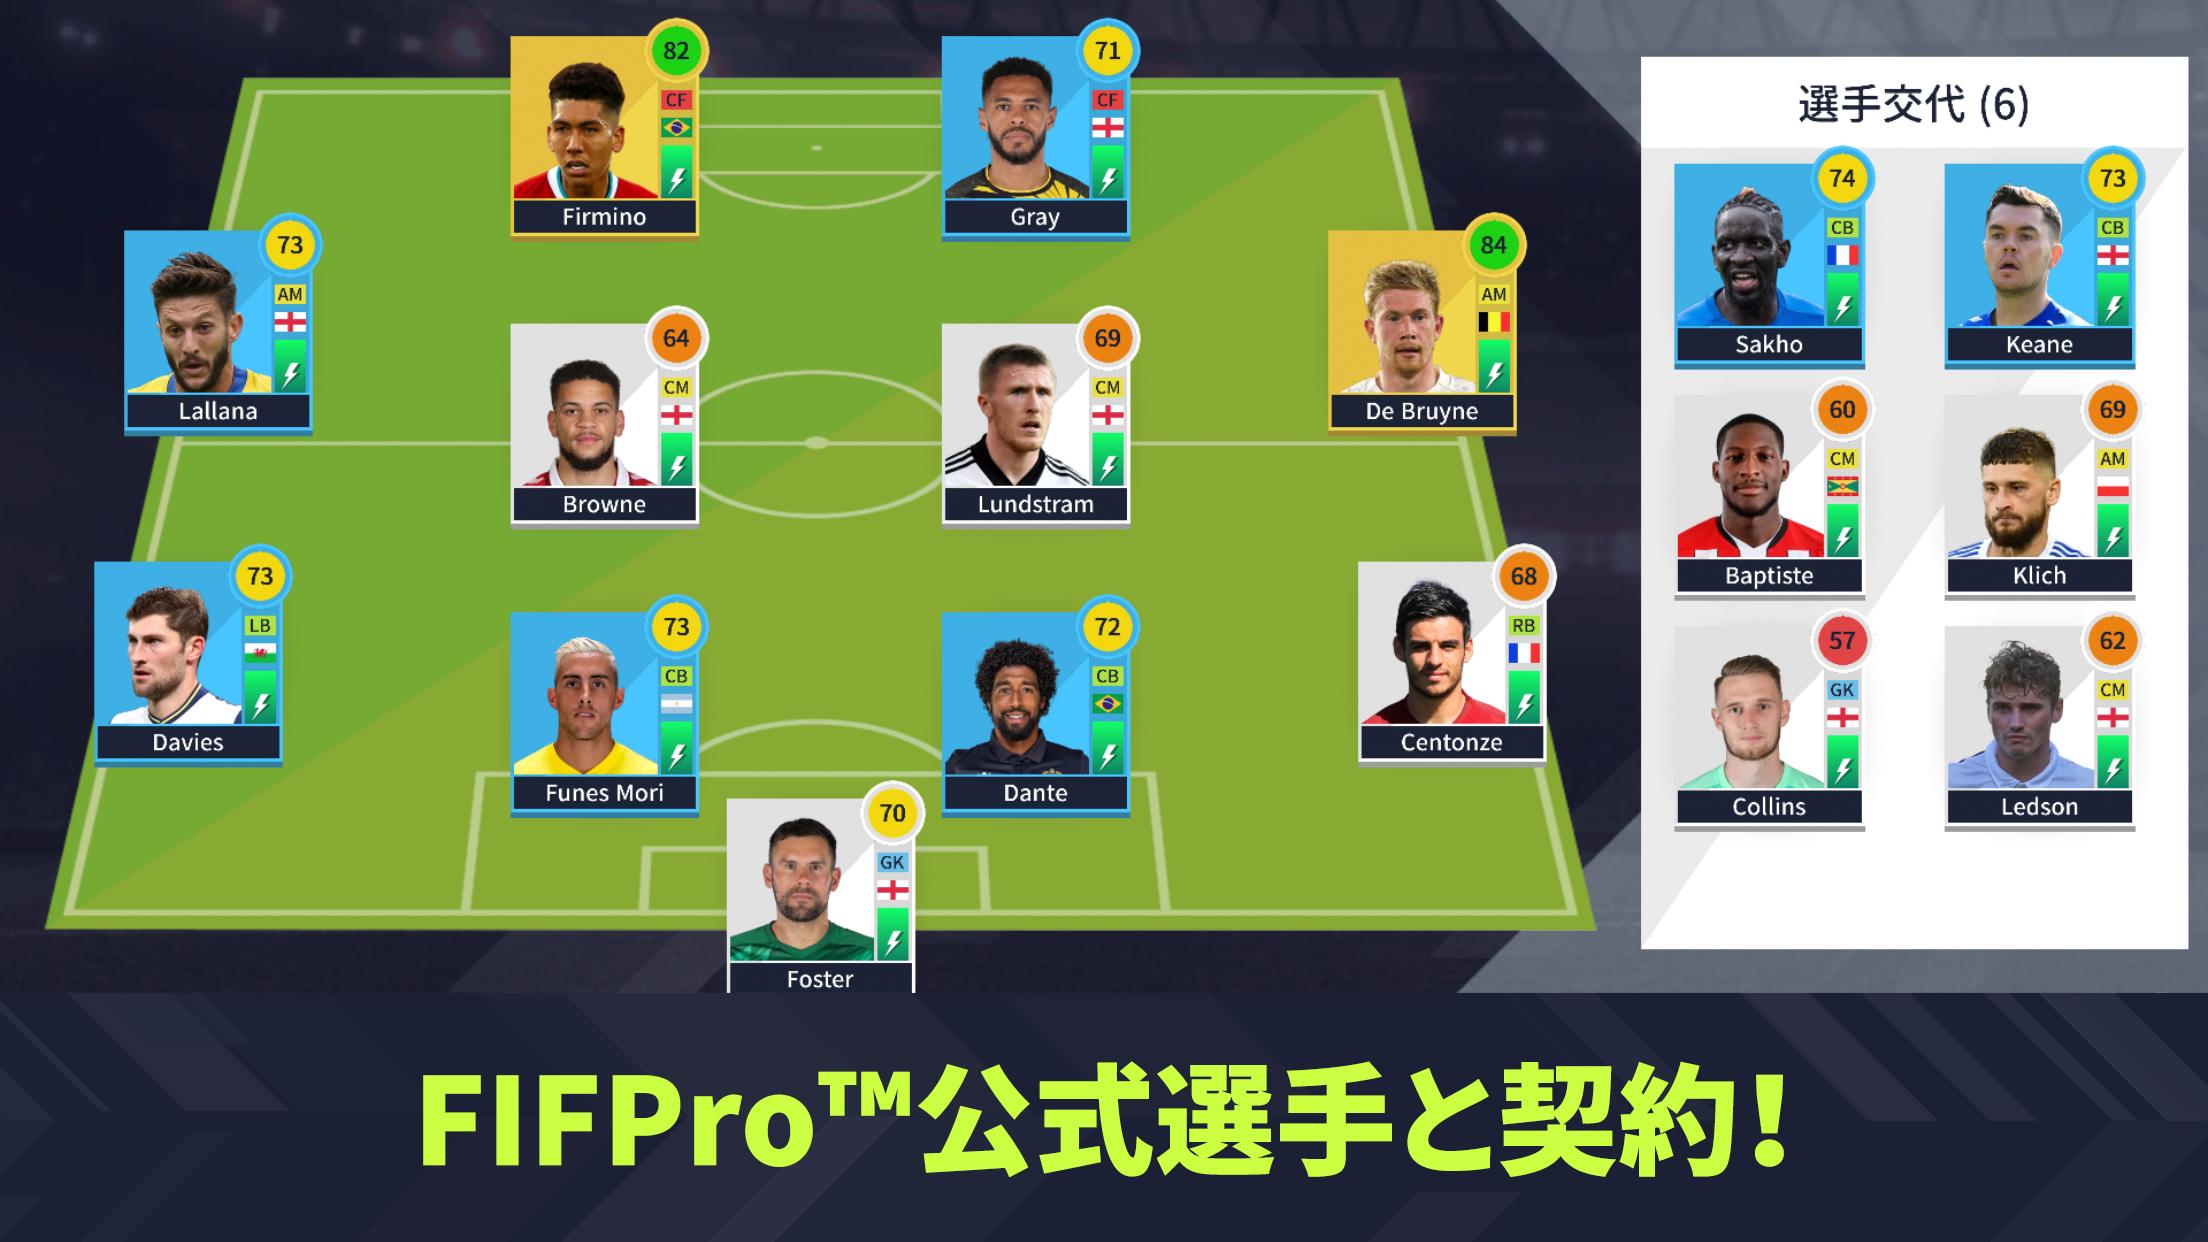 Android 用の Dream League Soccer 21 Apk をダウンロード